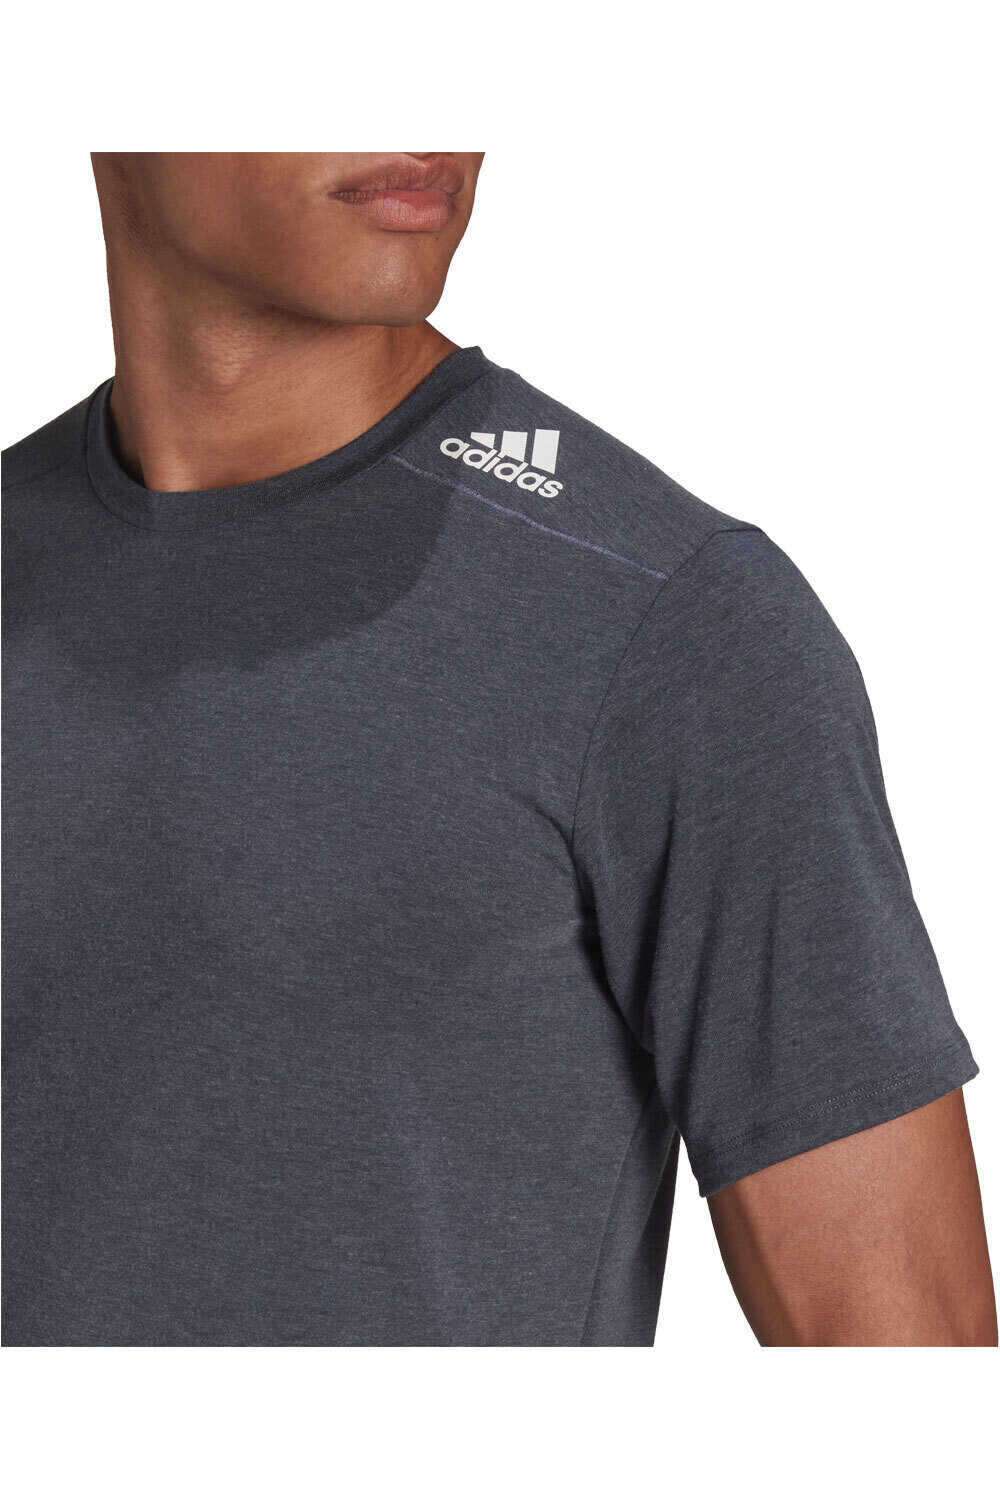 adidas camiseta fitness hombre Designed for Training vista detalle